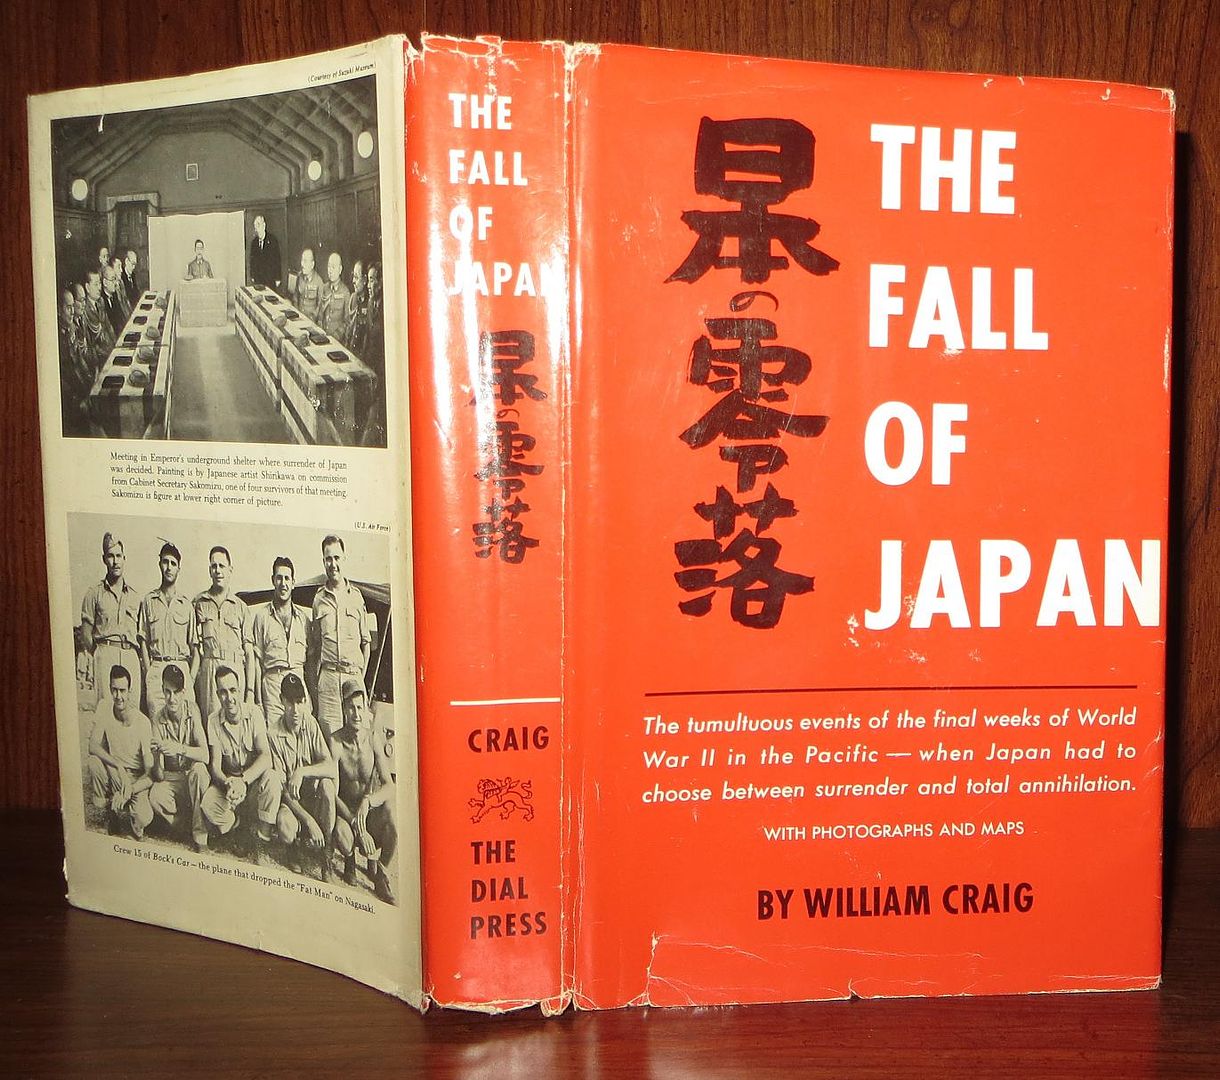 CRAIG, WILLIAM - The Fall of Japan